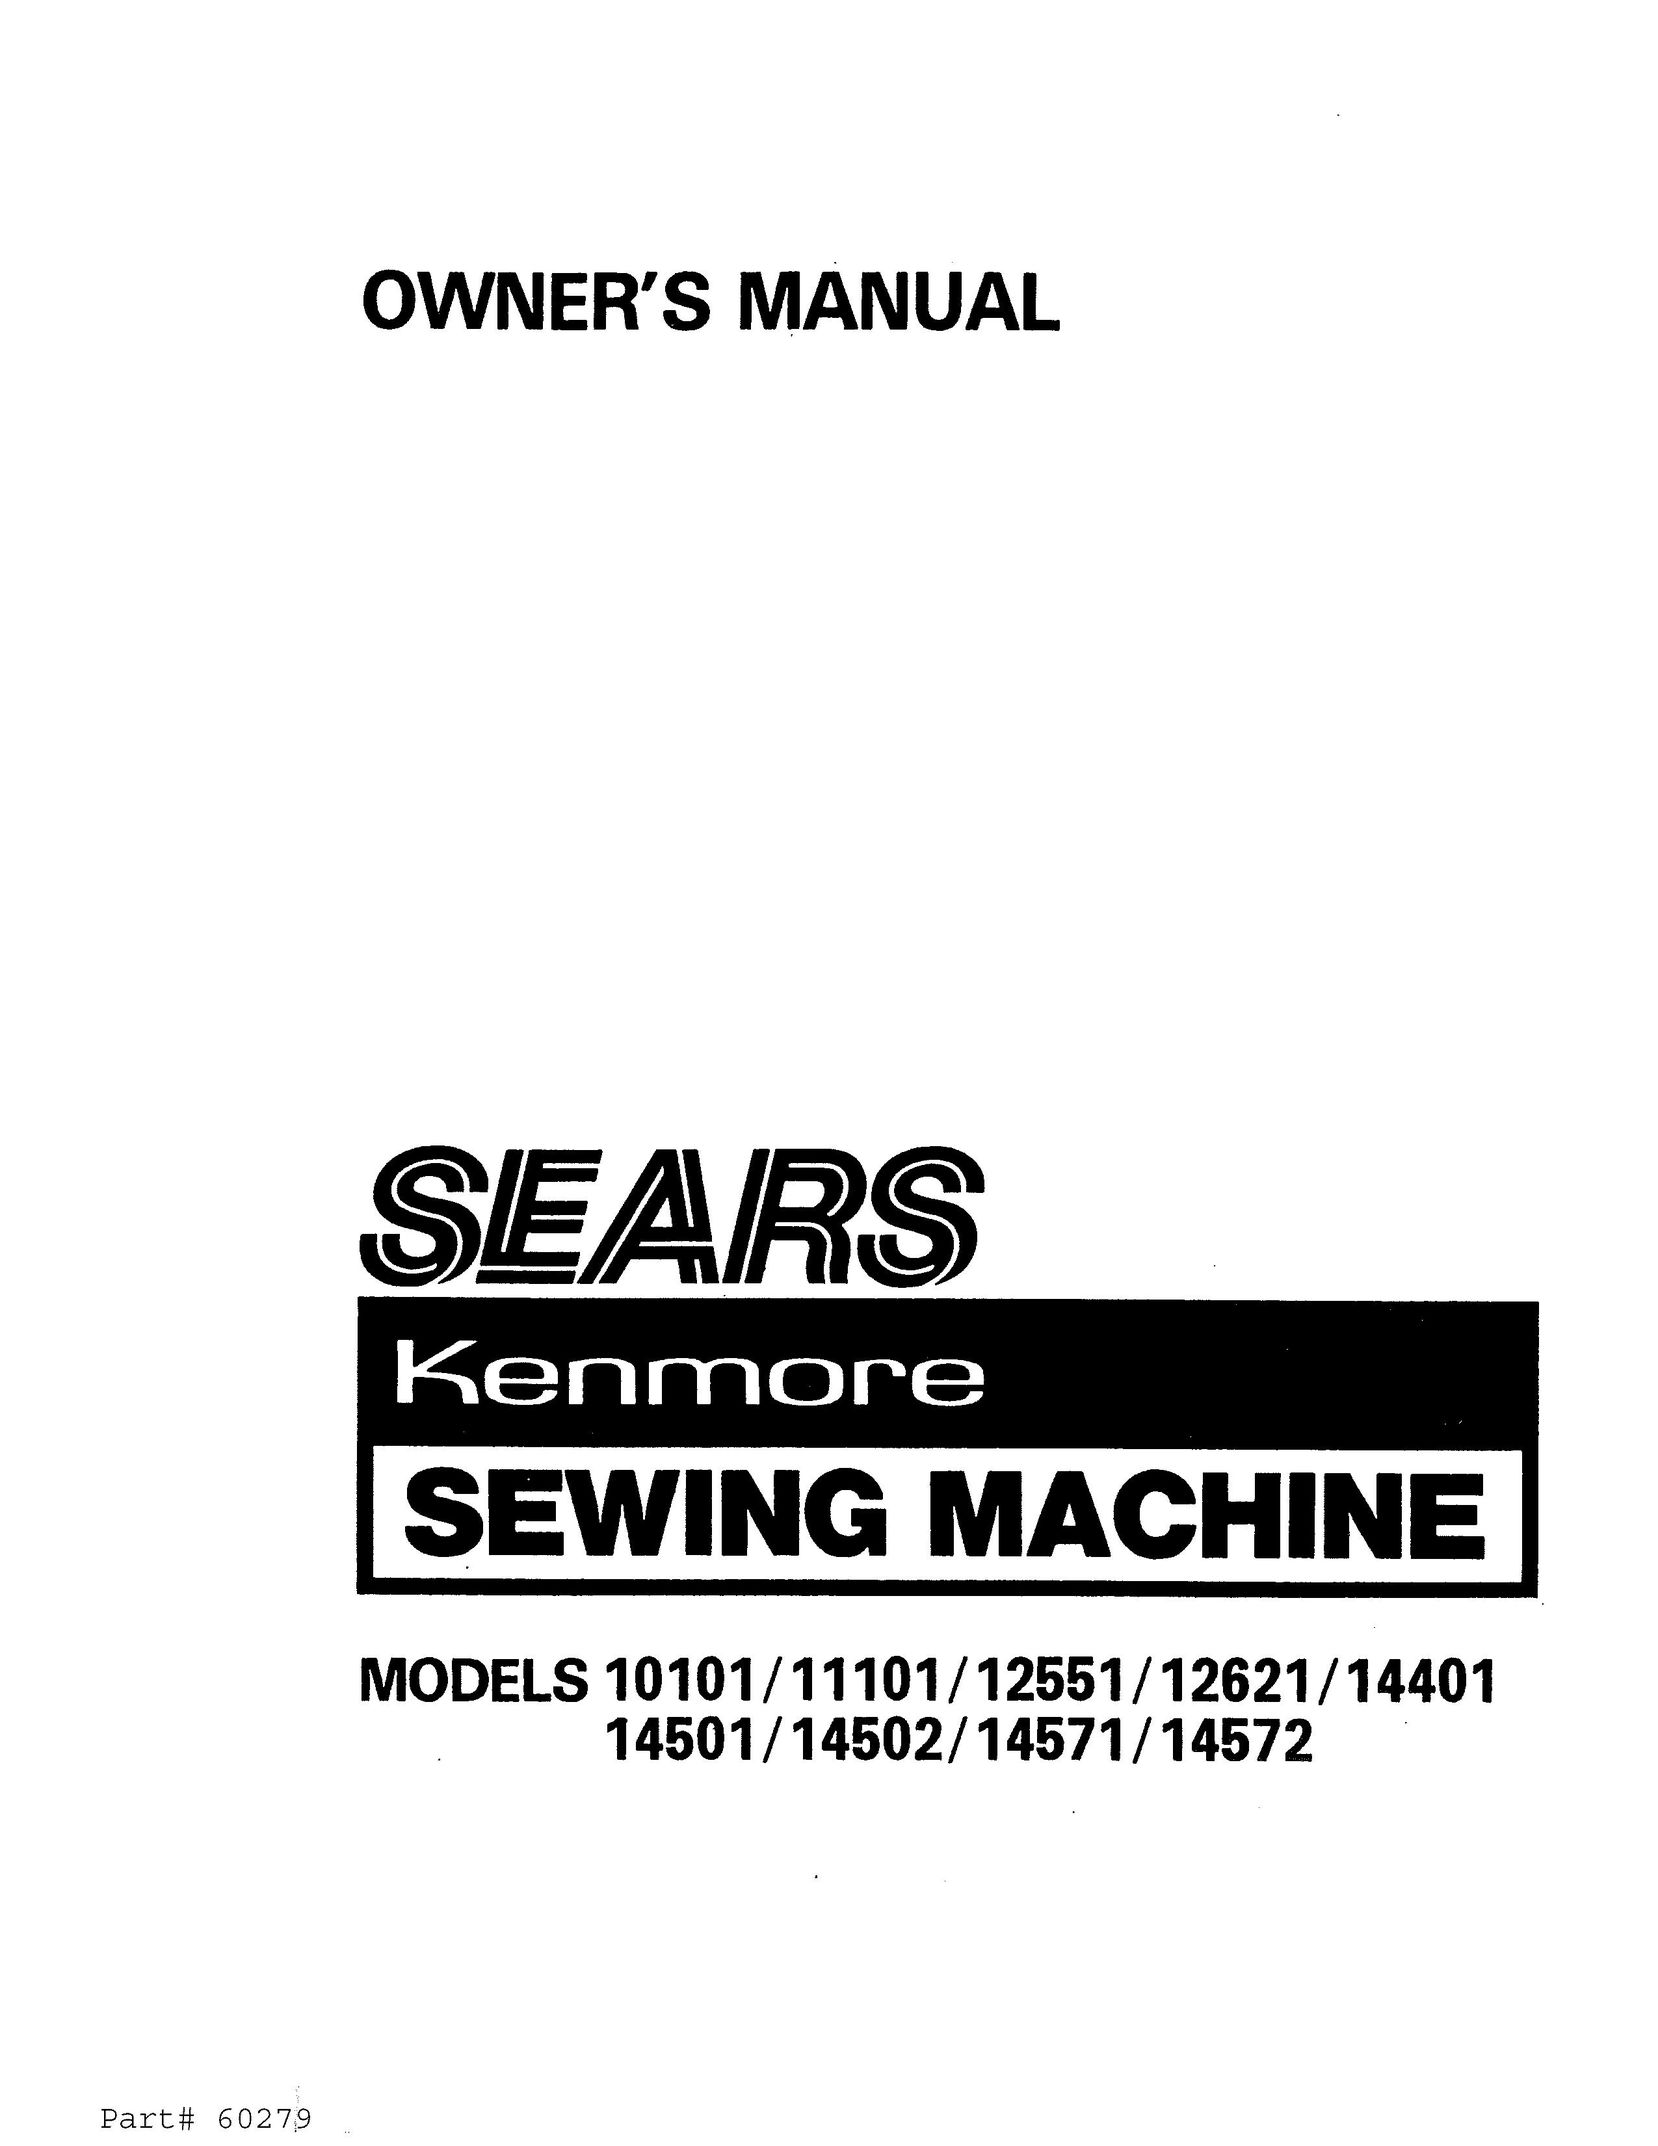 Kenmore 14501 Sewing Machine User Manual